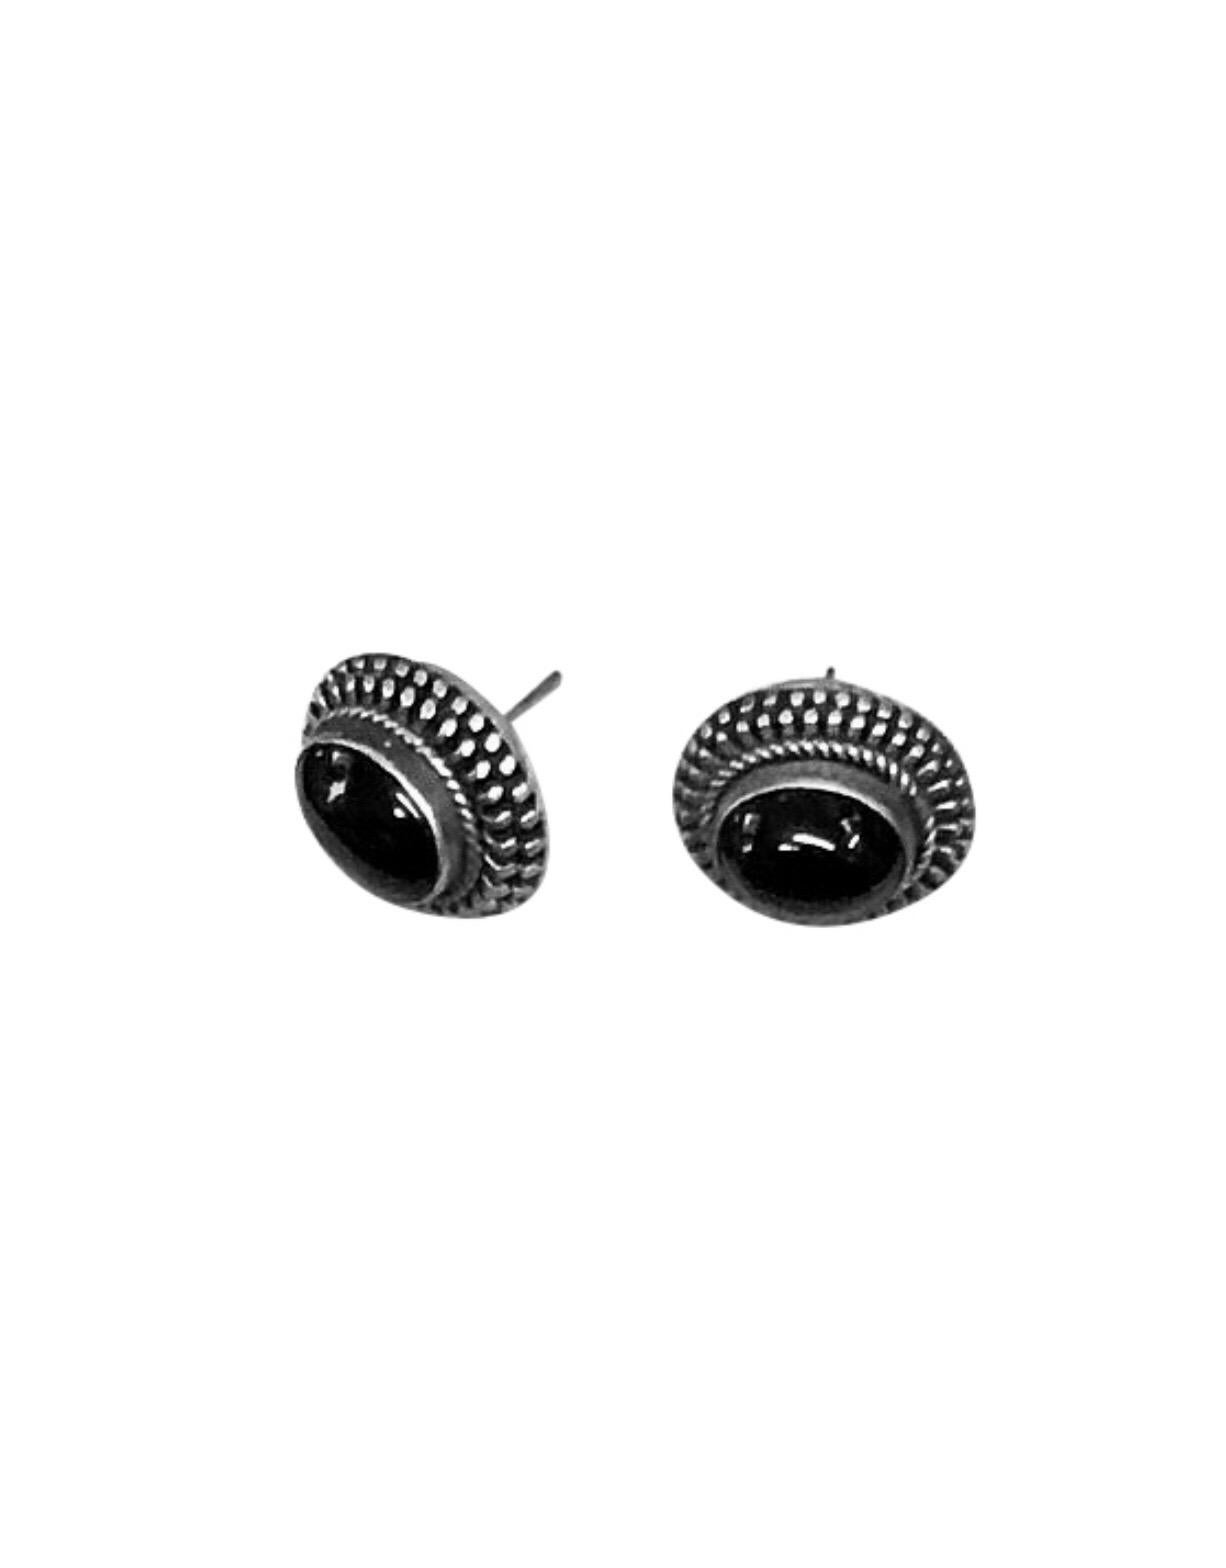 Oval Cut Exolette Black Onyx Sterling Pendant Necklace Earring Set For Sale